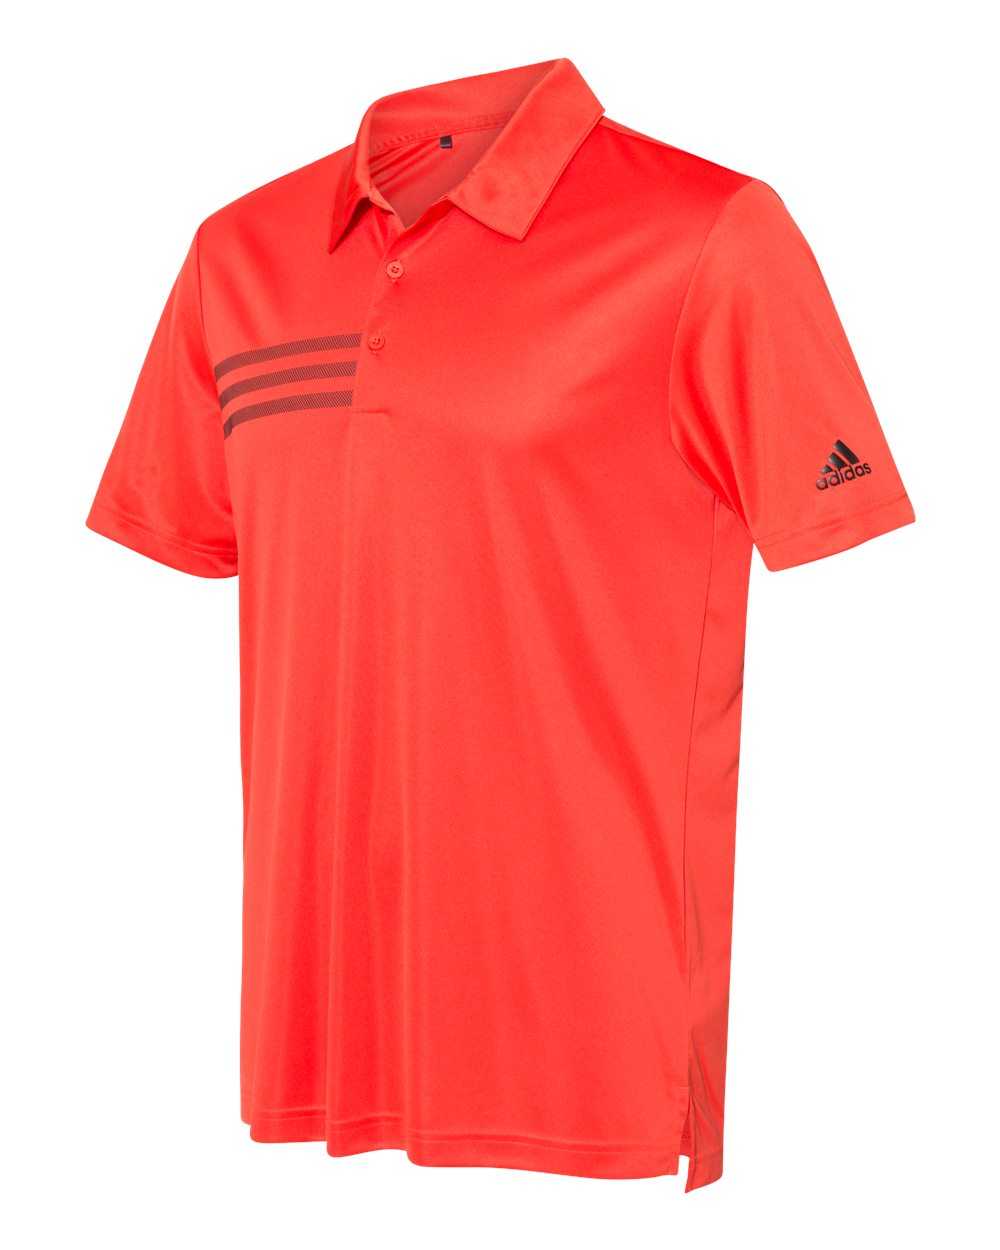 Adidas A324 3-Stripes Chest Sport Shirt - Blaze Orange Black - HIT a Double